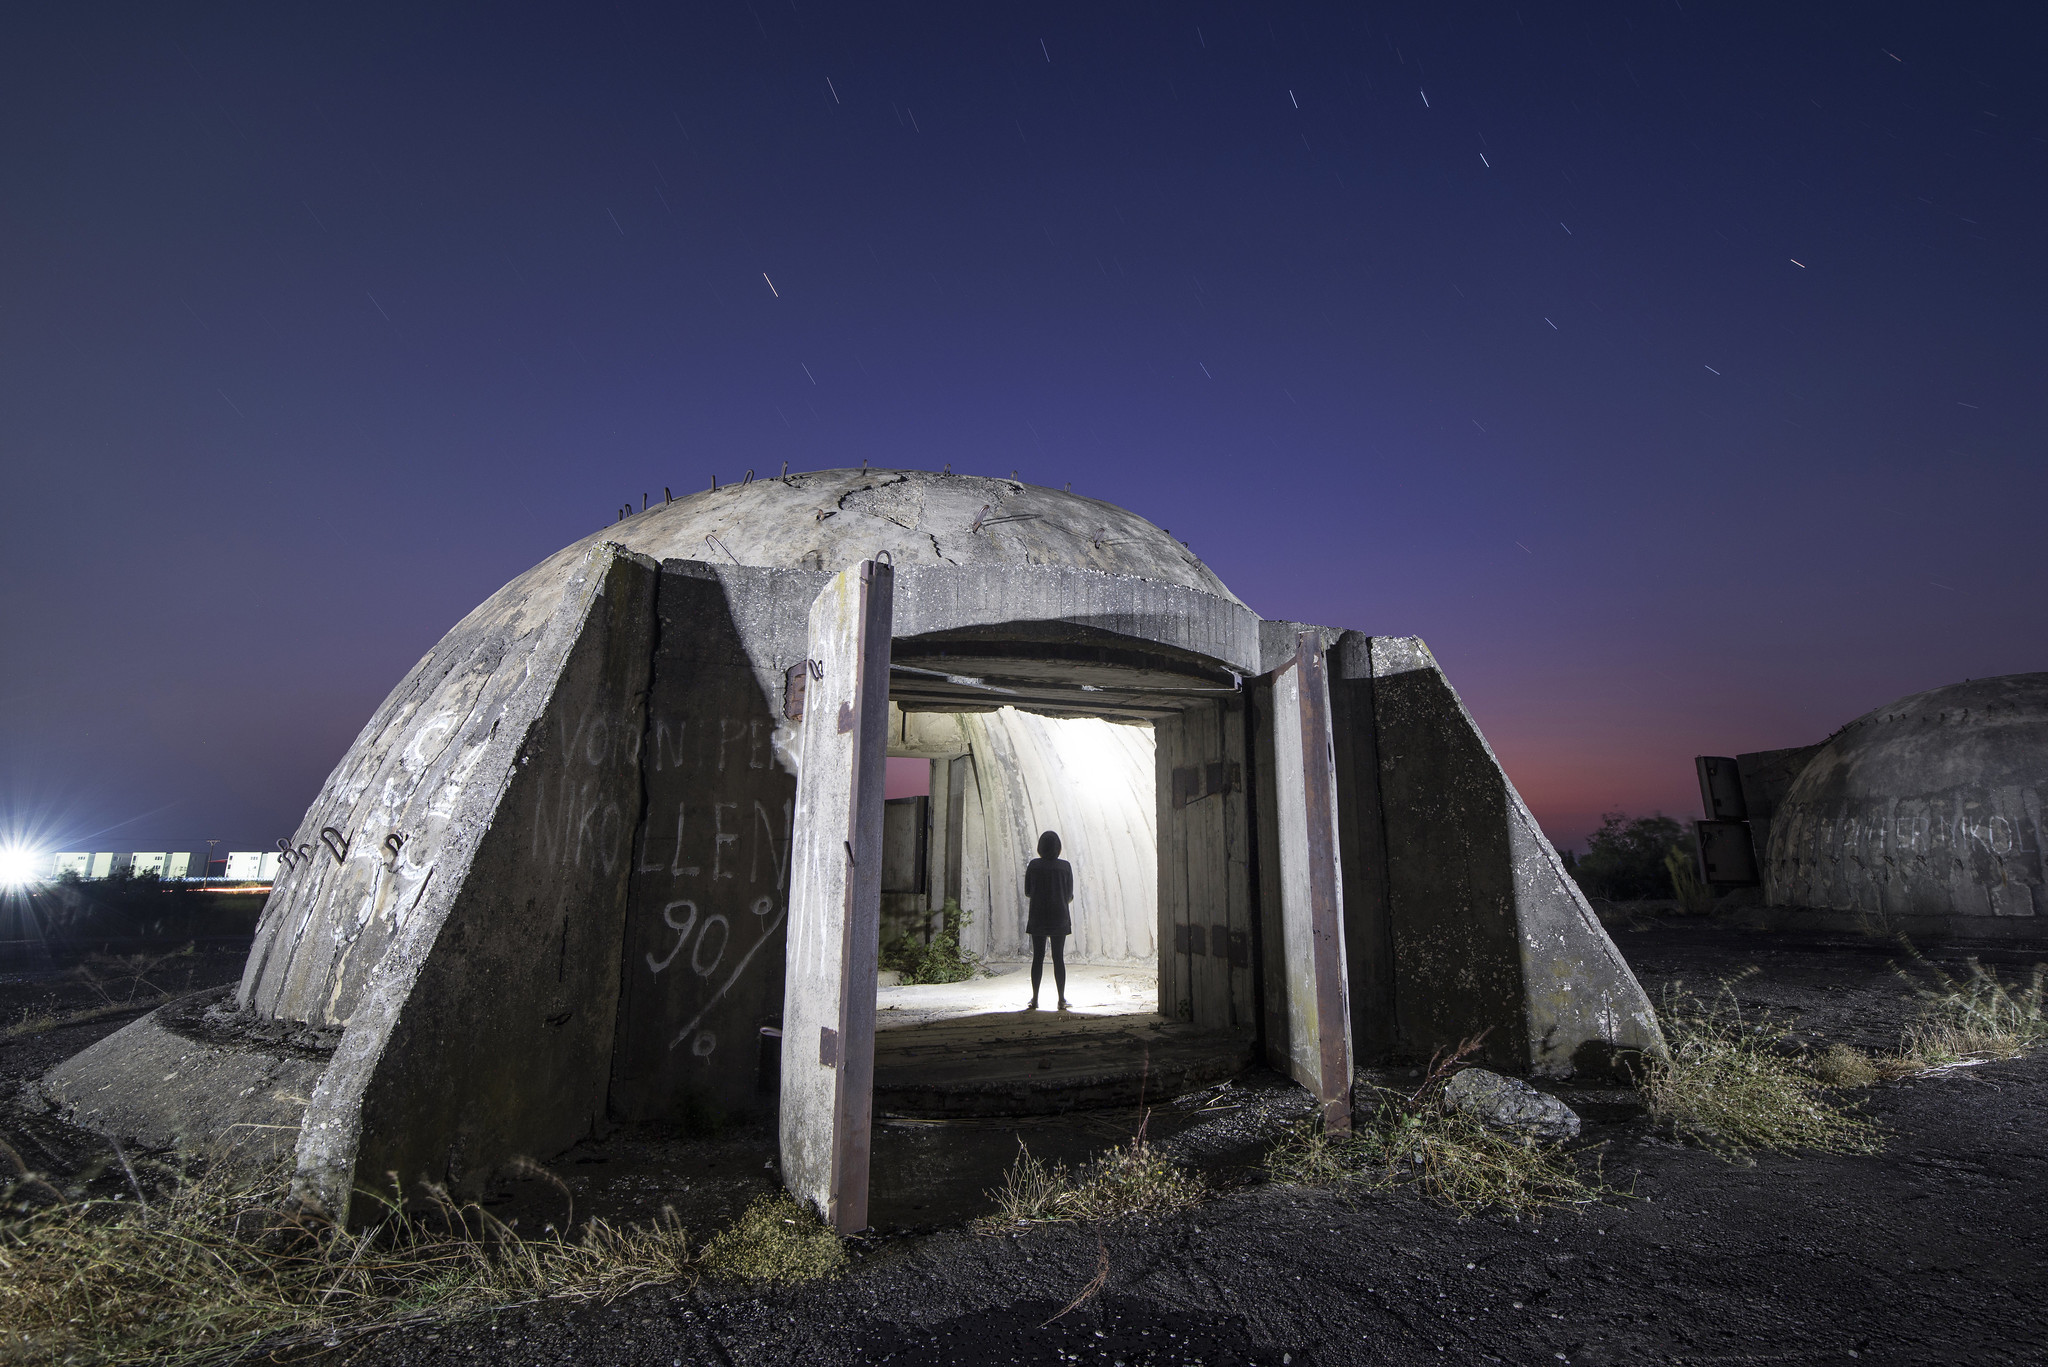 Бункер в Тале, Албания, фотограф Сяо Янг, Xiao Yang Eternal monuments in the dark